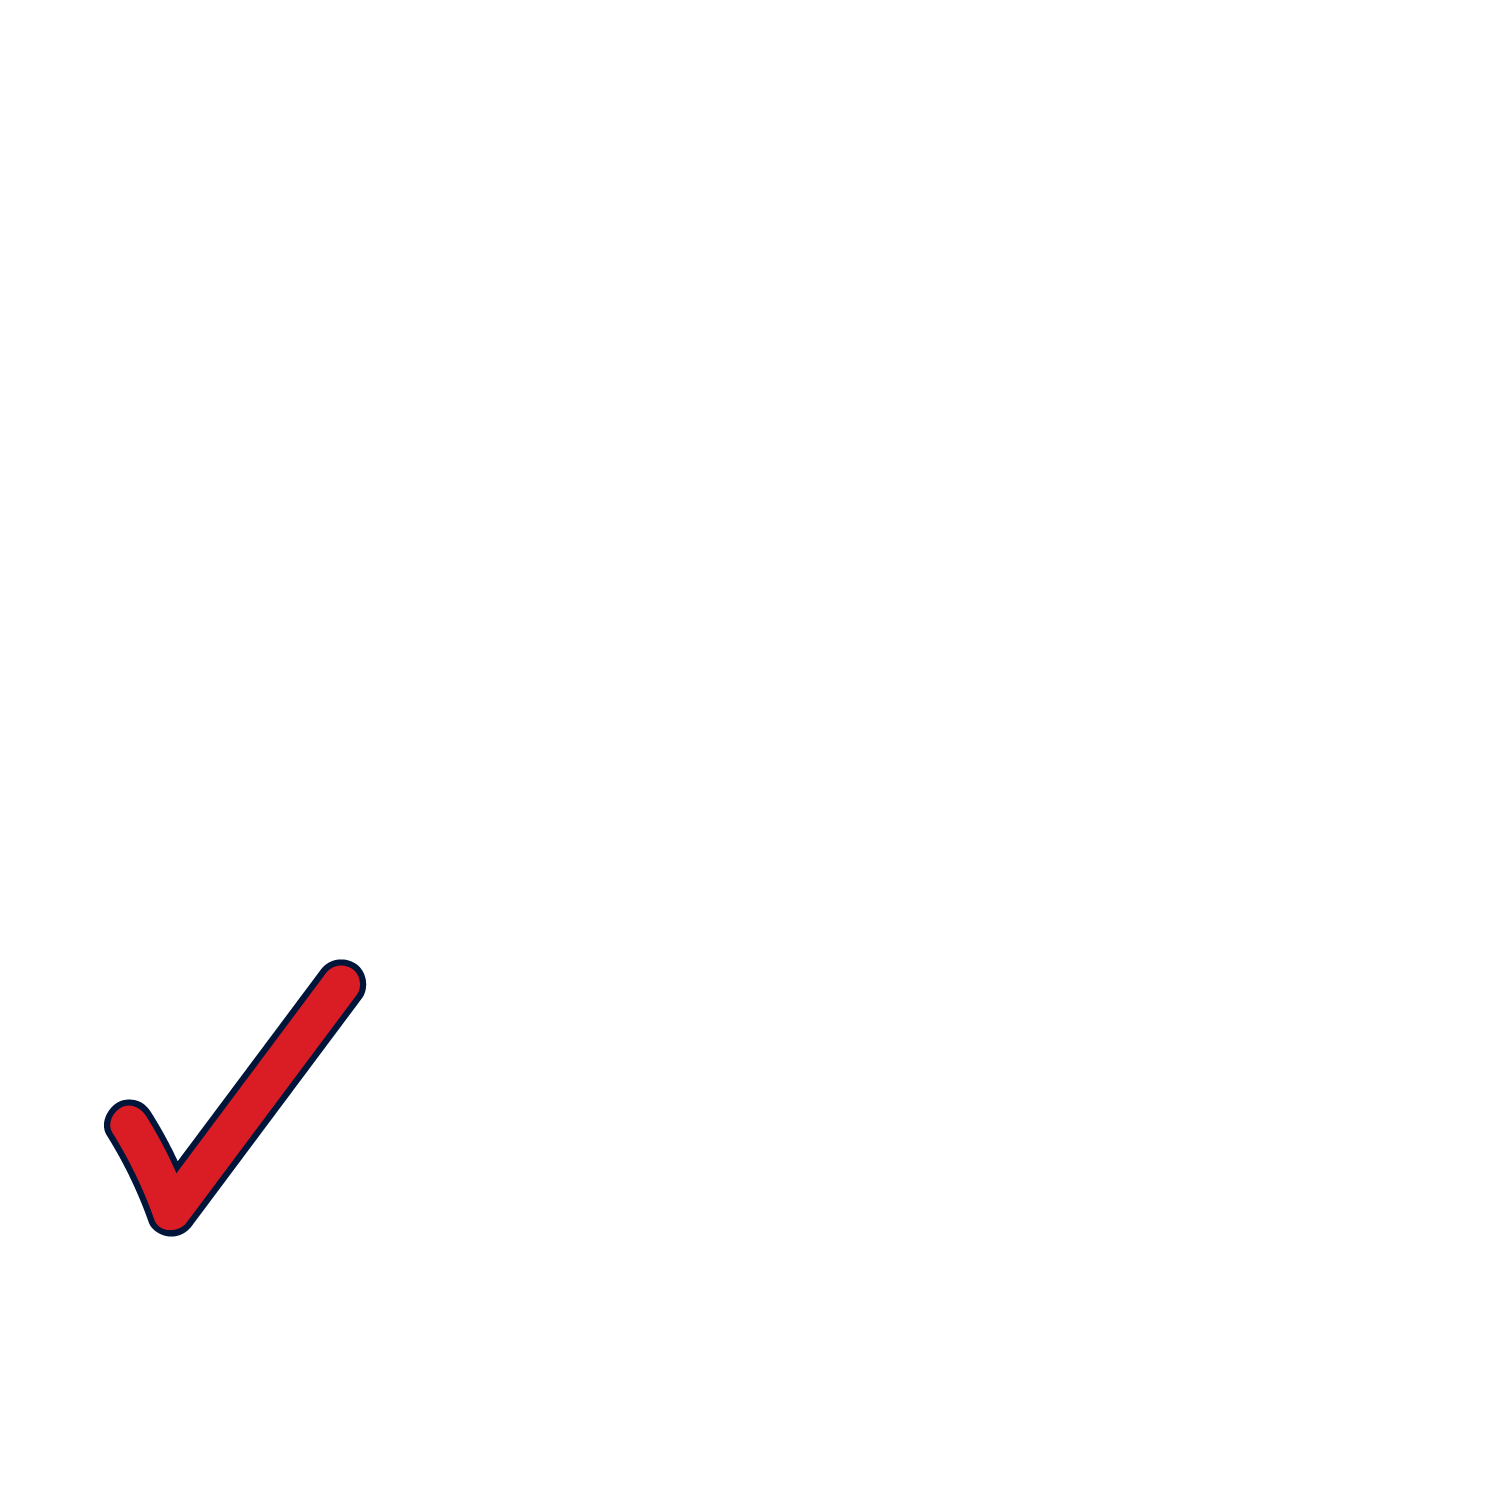 I'm for - Trump - Biden - ANYONE ELSE T Shirt